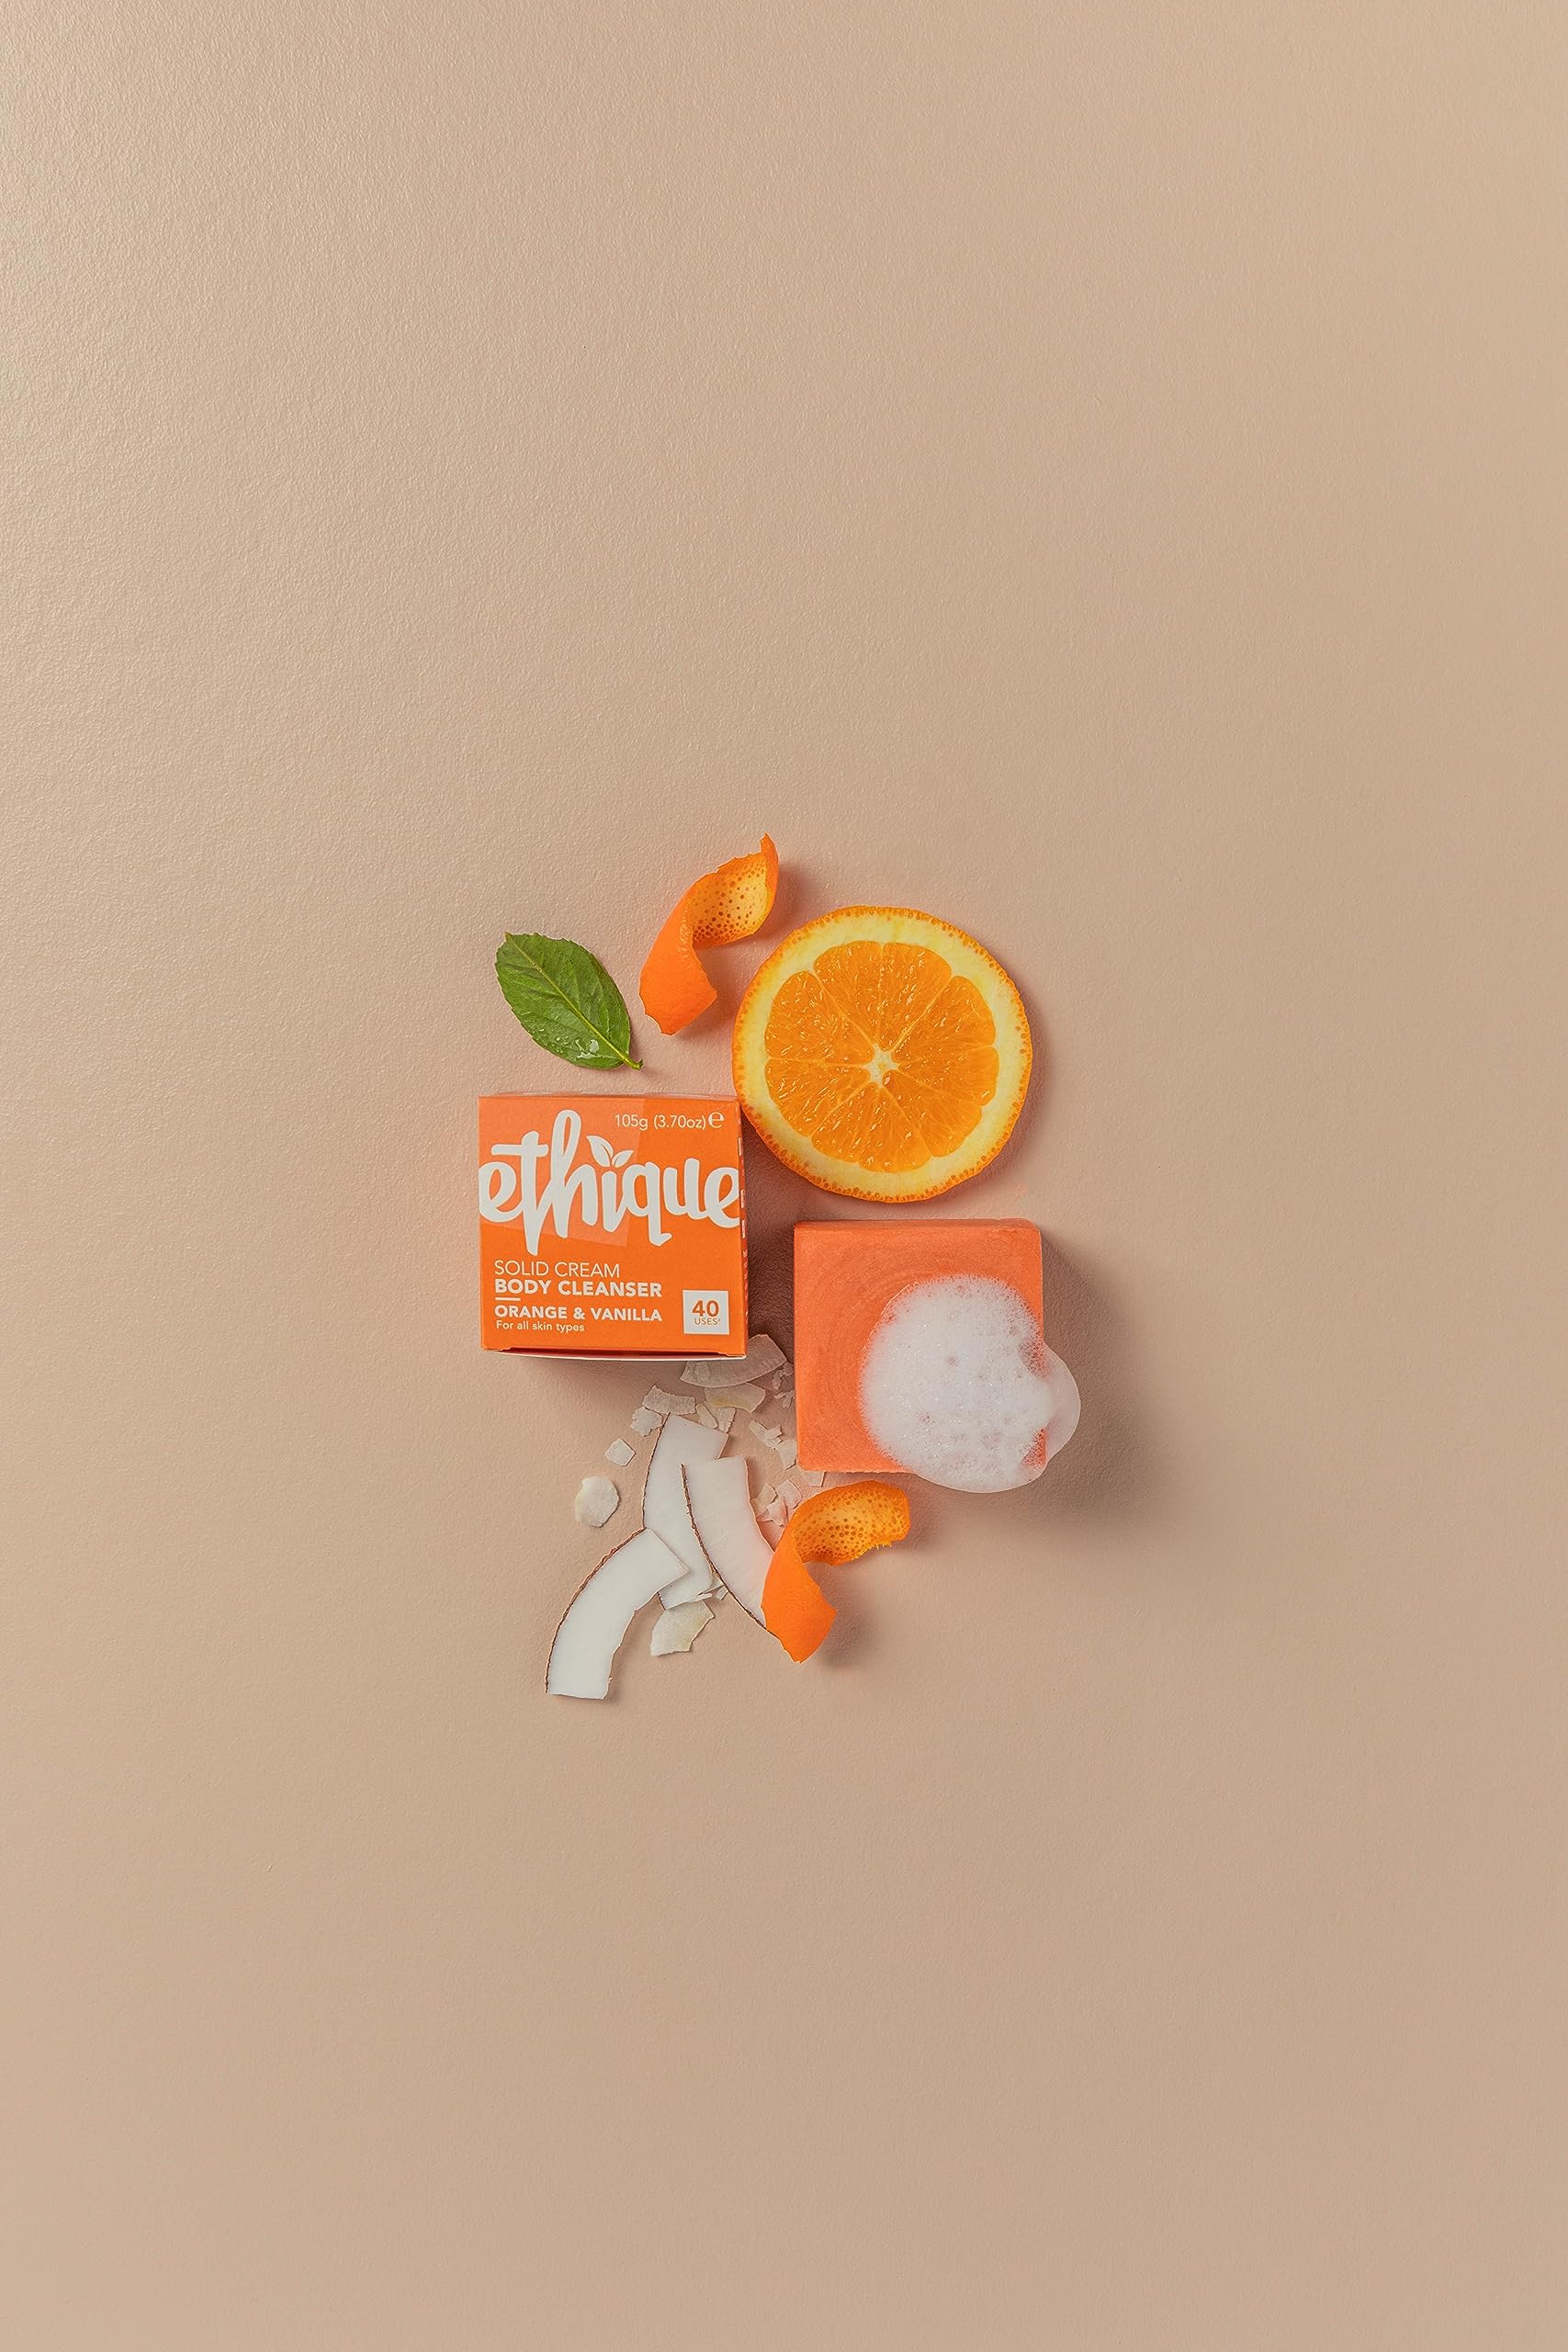 Ethique Sweet Orange & Vanilla Cream Solid Natural Bodywash Soap for Sensitive Skin - Super Hydrating & pH Balanced - Plastic-Free, Vegan, Cruelty-Free, 3.7 oz